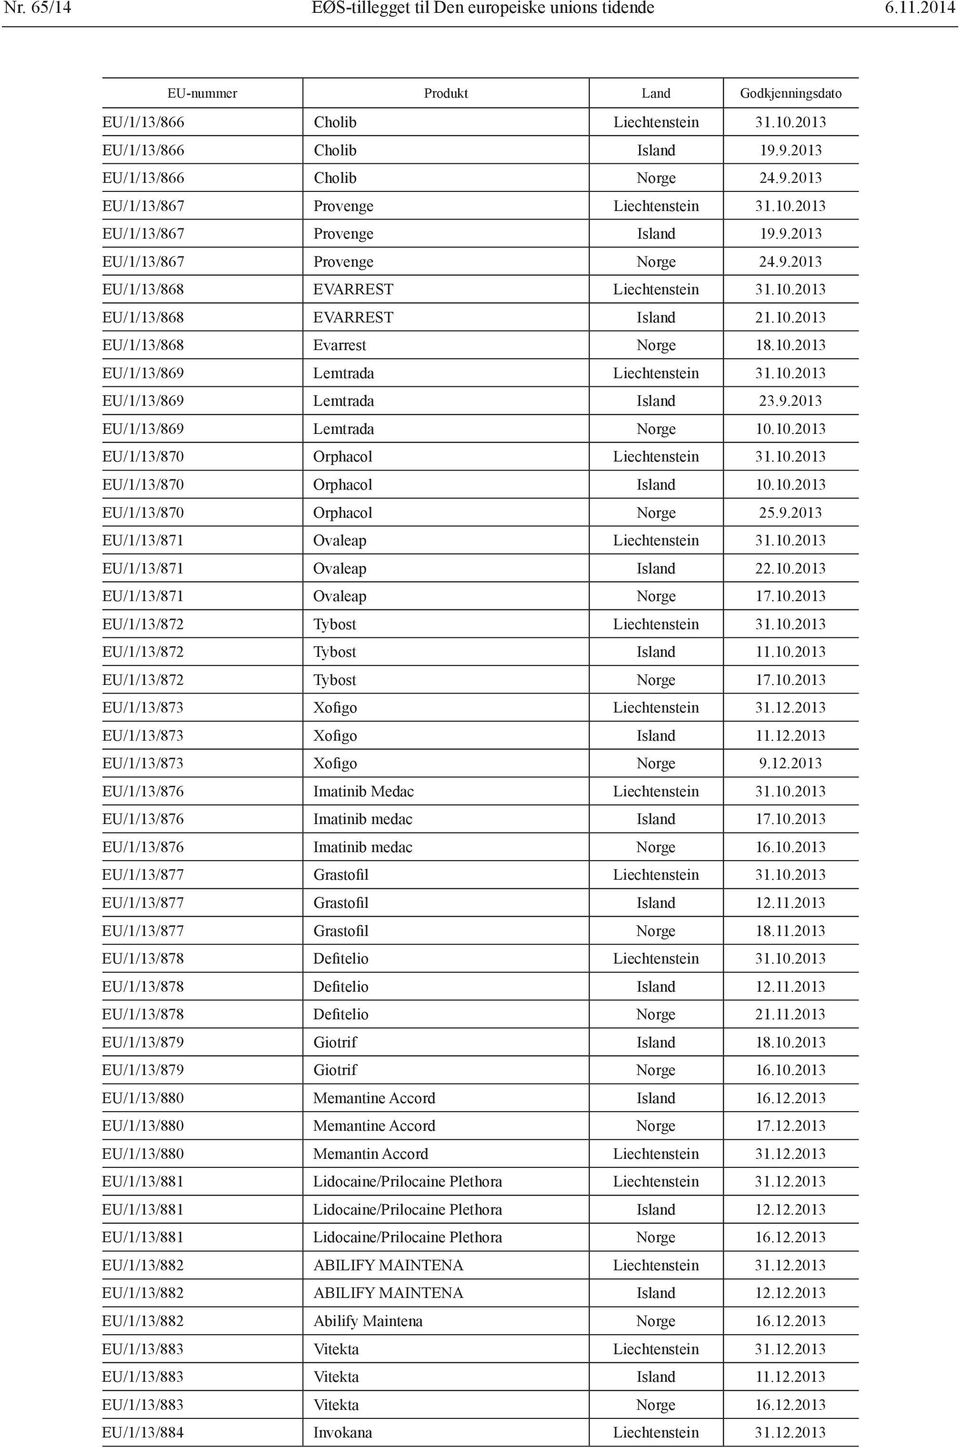 10.2013 EU/1/13/868 EVARREST Island 21.10.2013 EU/1/13/868 Evarrest Norge 18.10.2013 EU/1/13/869 Lemtrada Liechtenstein 31.10.2013 EU/1/13/869 Lemtrada Island 23.9.2013 EU/1/13/869 Lemtrada Norge 10.